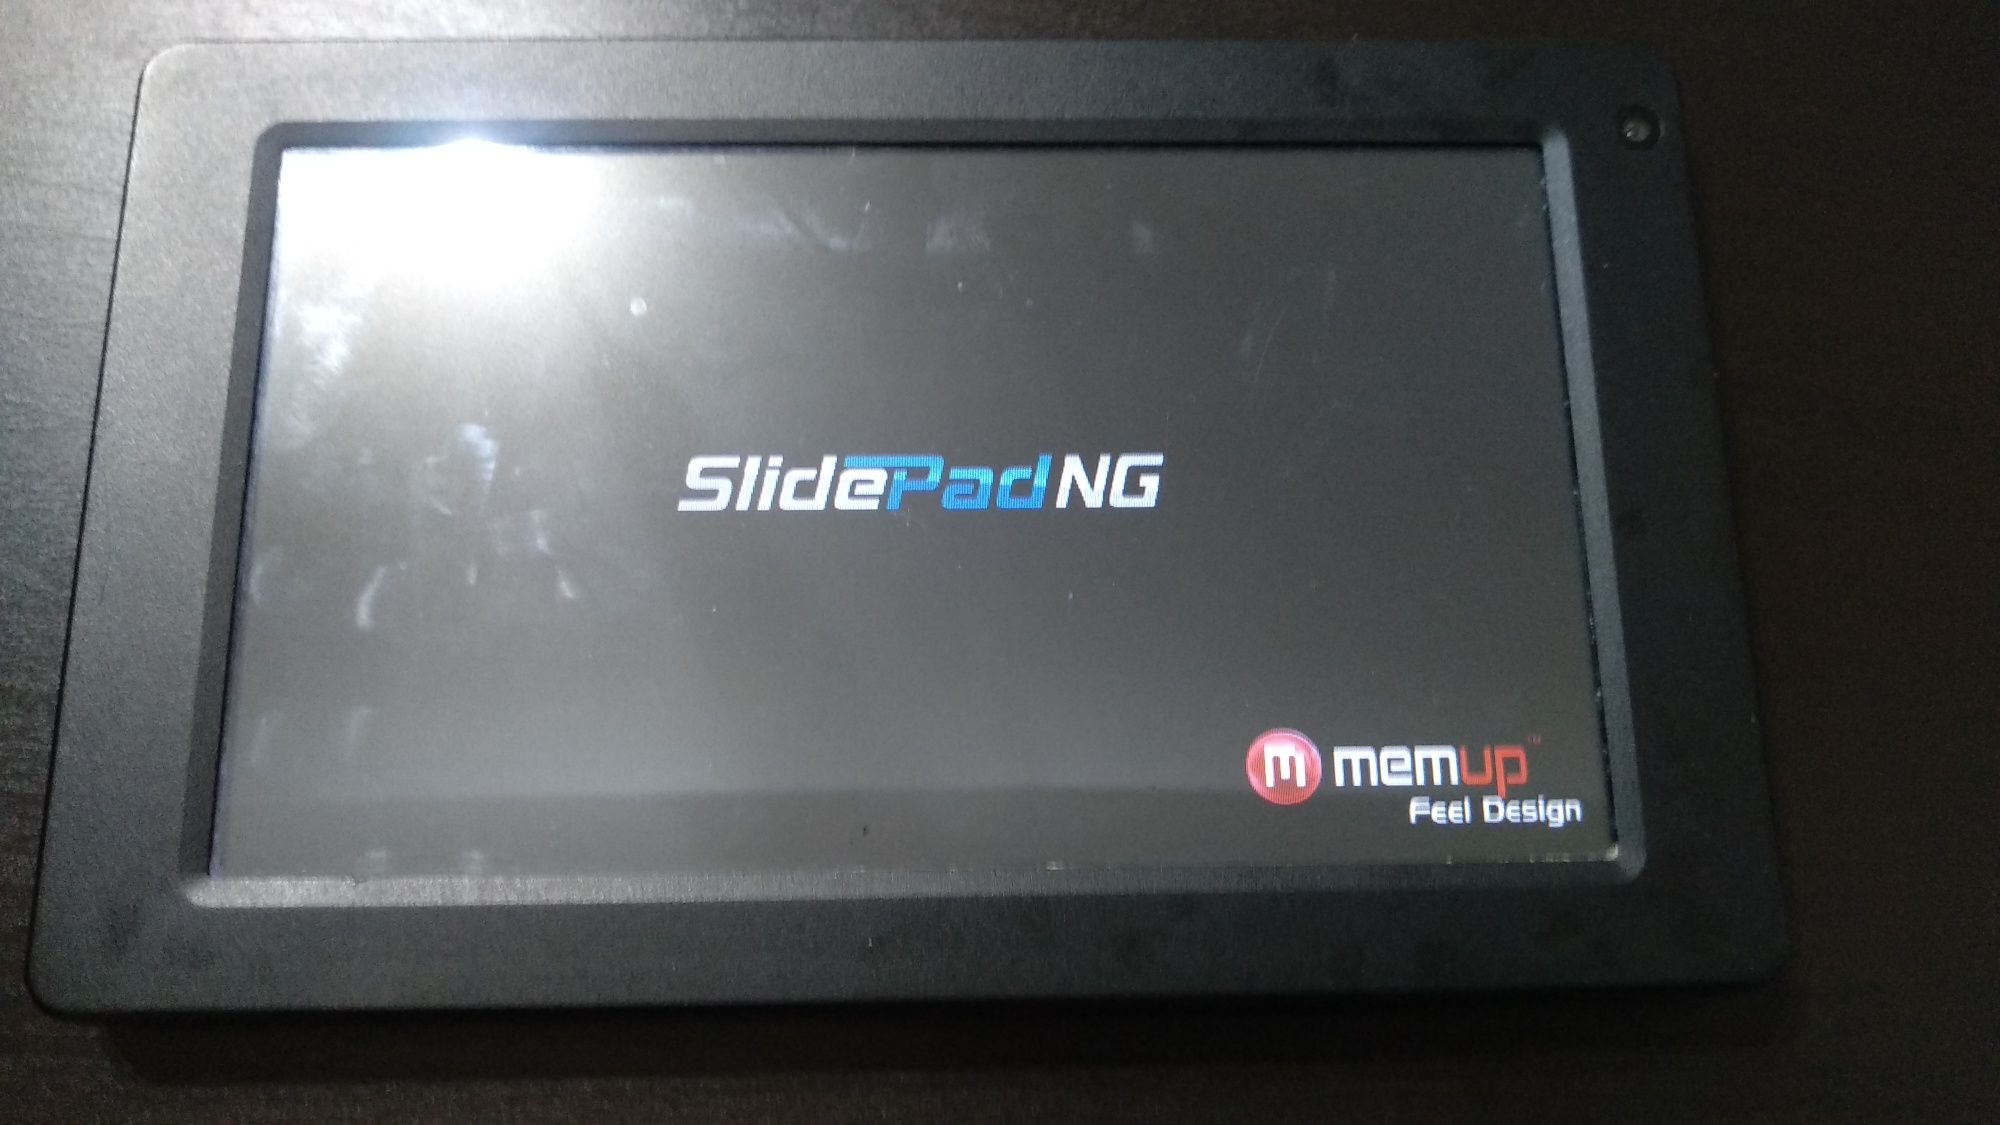 Tablet SlidePad 704 C